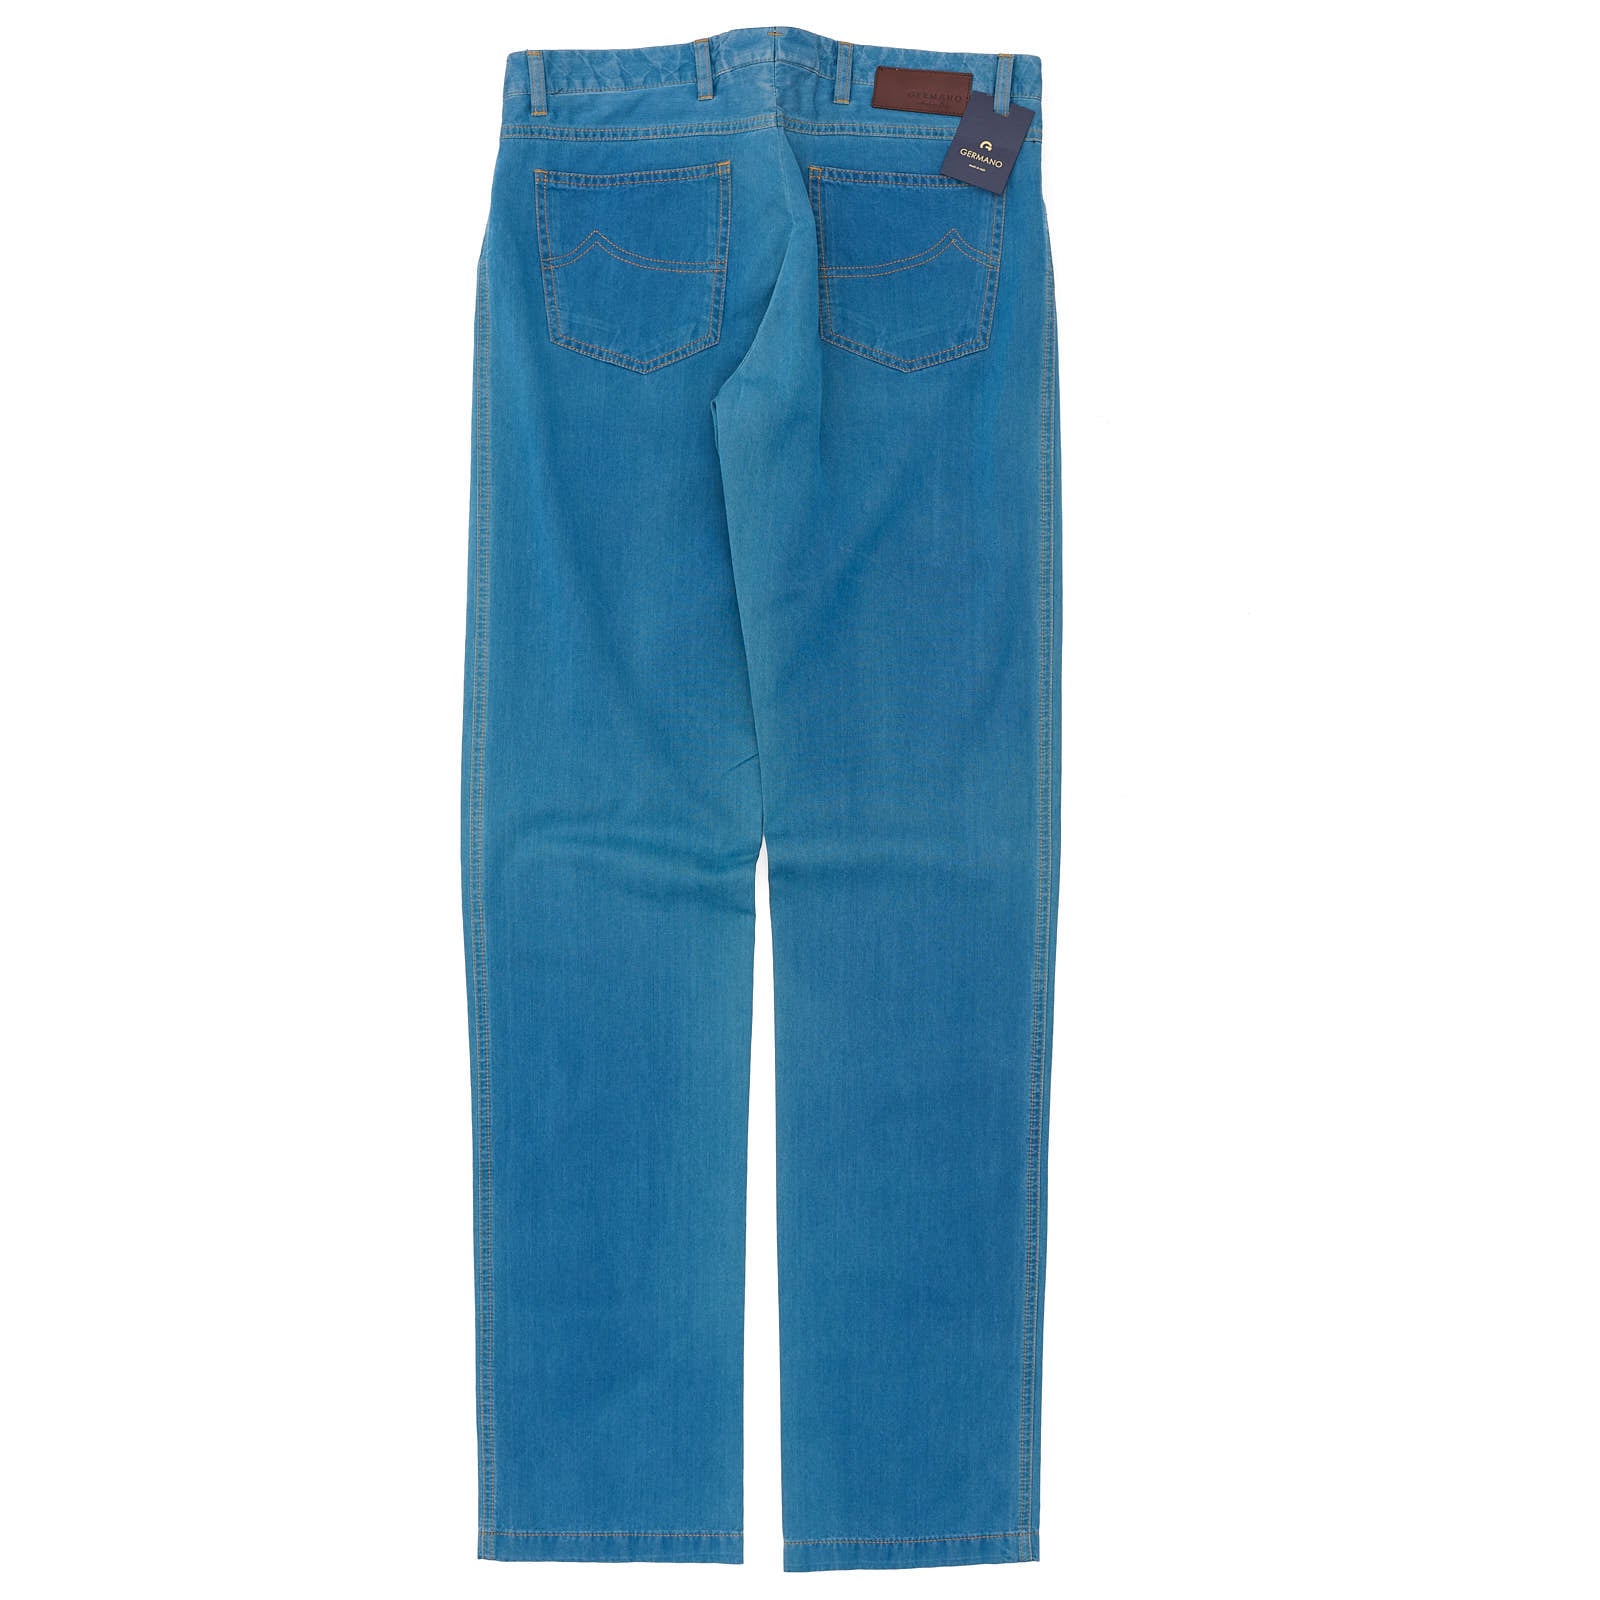 GERMANO Blue Cotton Denim Slim Straight Fit Jeans Pants NEW